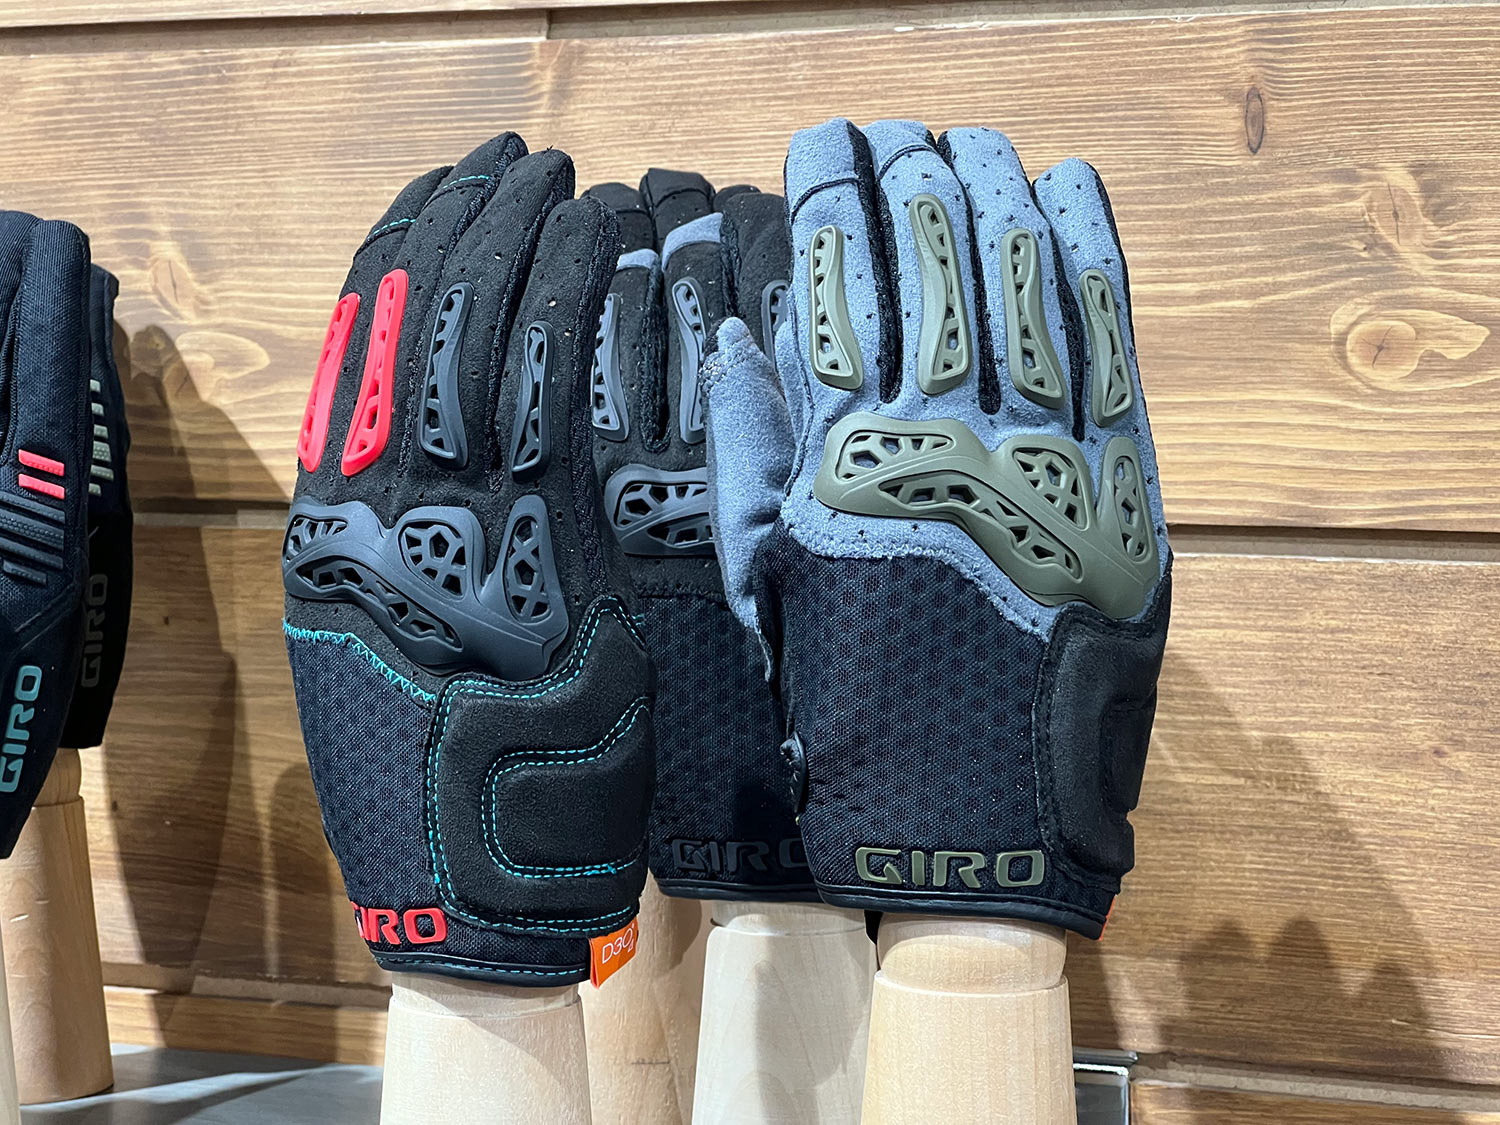 Giro Gnar mountain bike glove with D30 impact protection